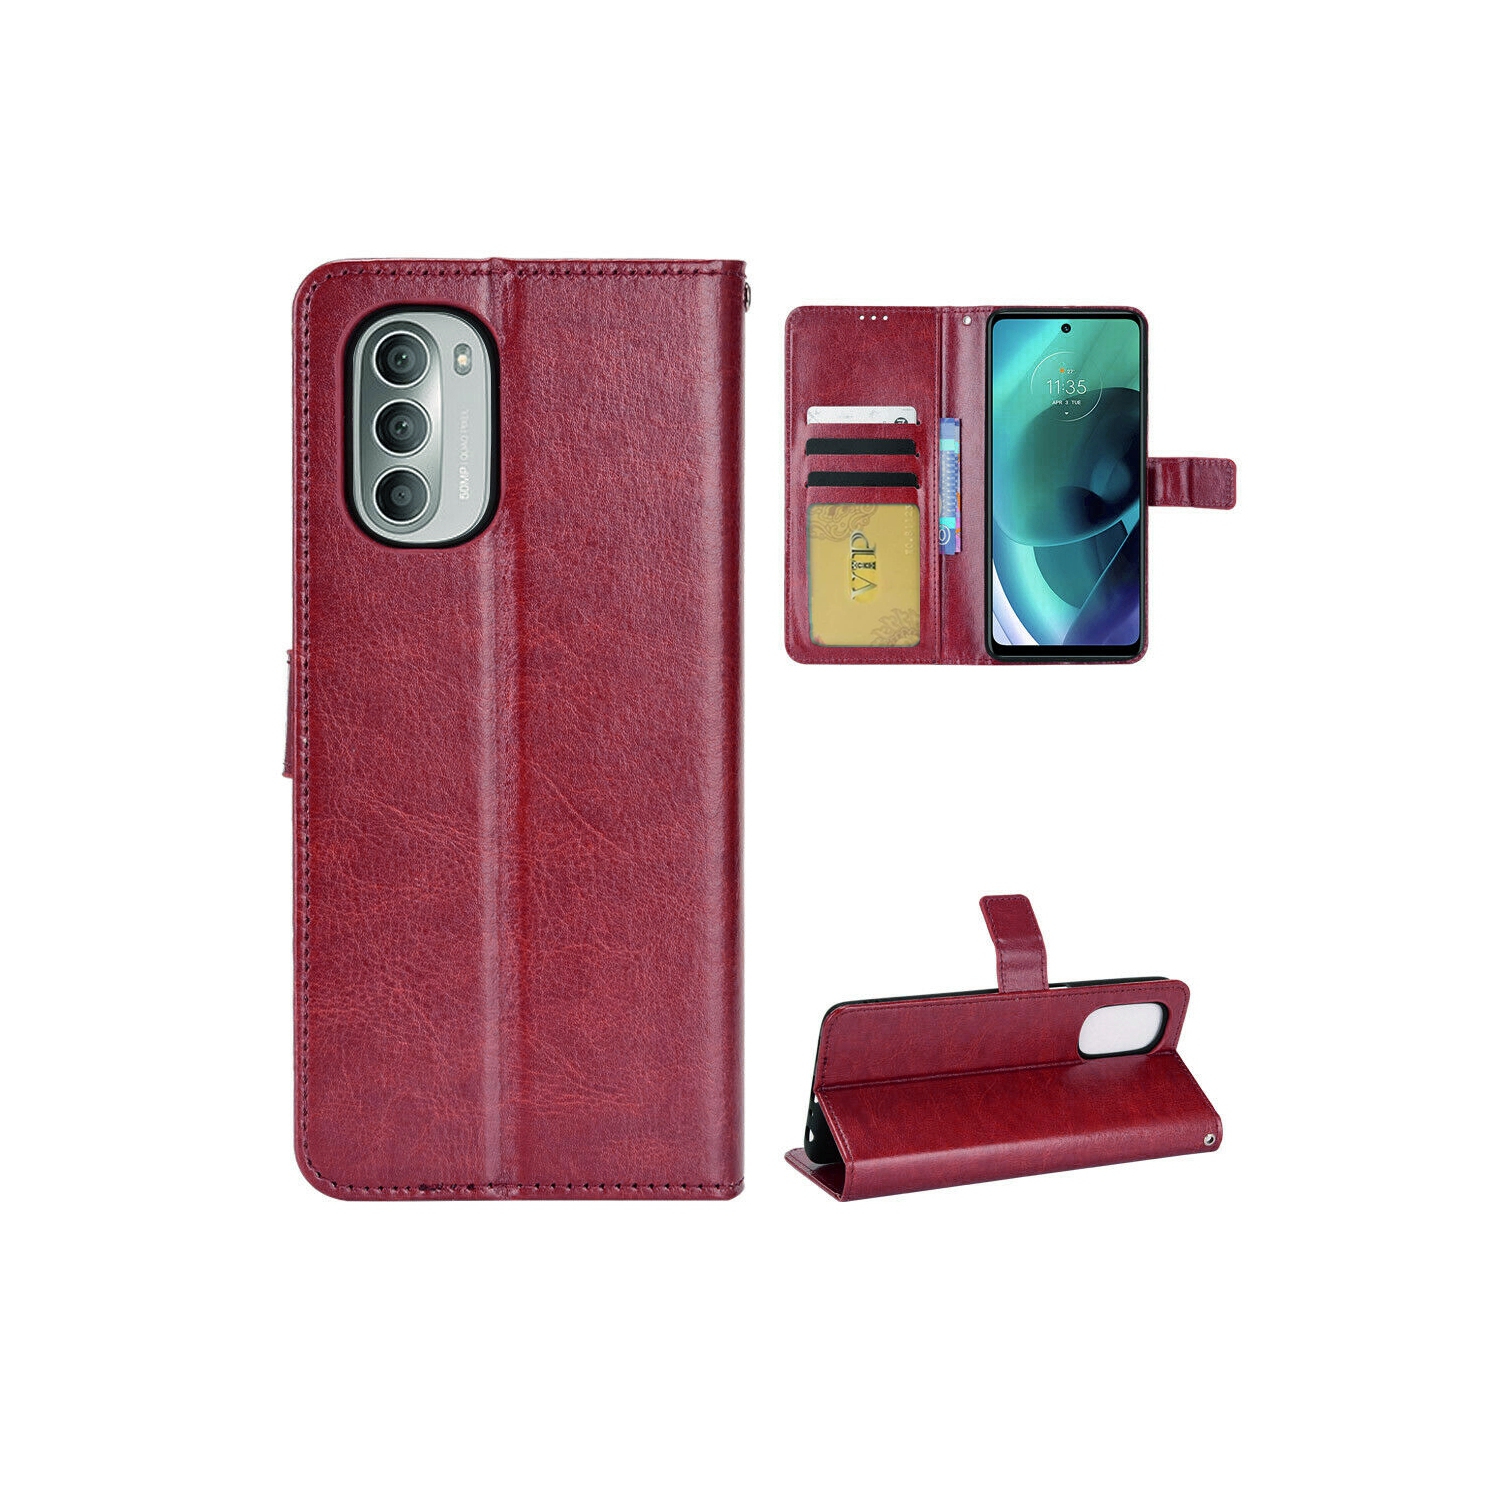 [CS] Motorola Moto G Stylus 5G 2022 Case, Magnetic Leather Folio Wallet Flip Case Cover with Card Slot, Wine